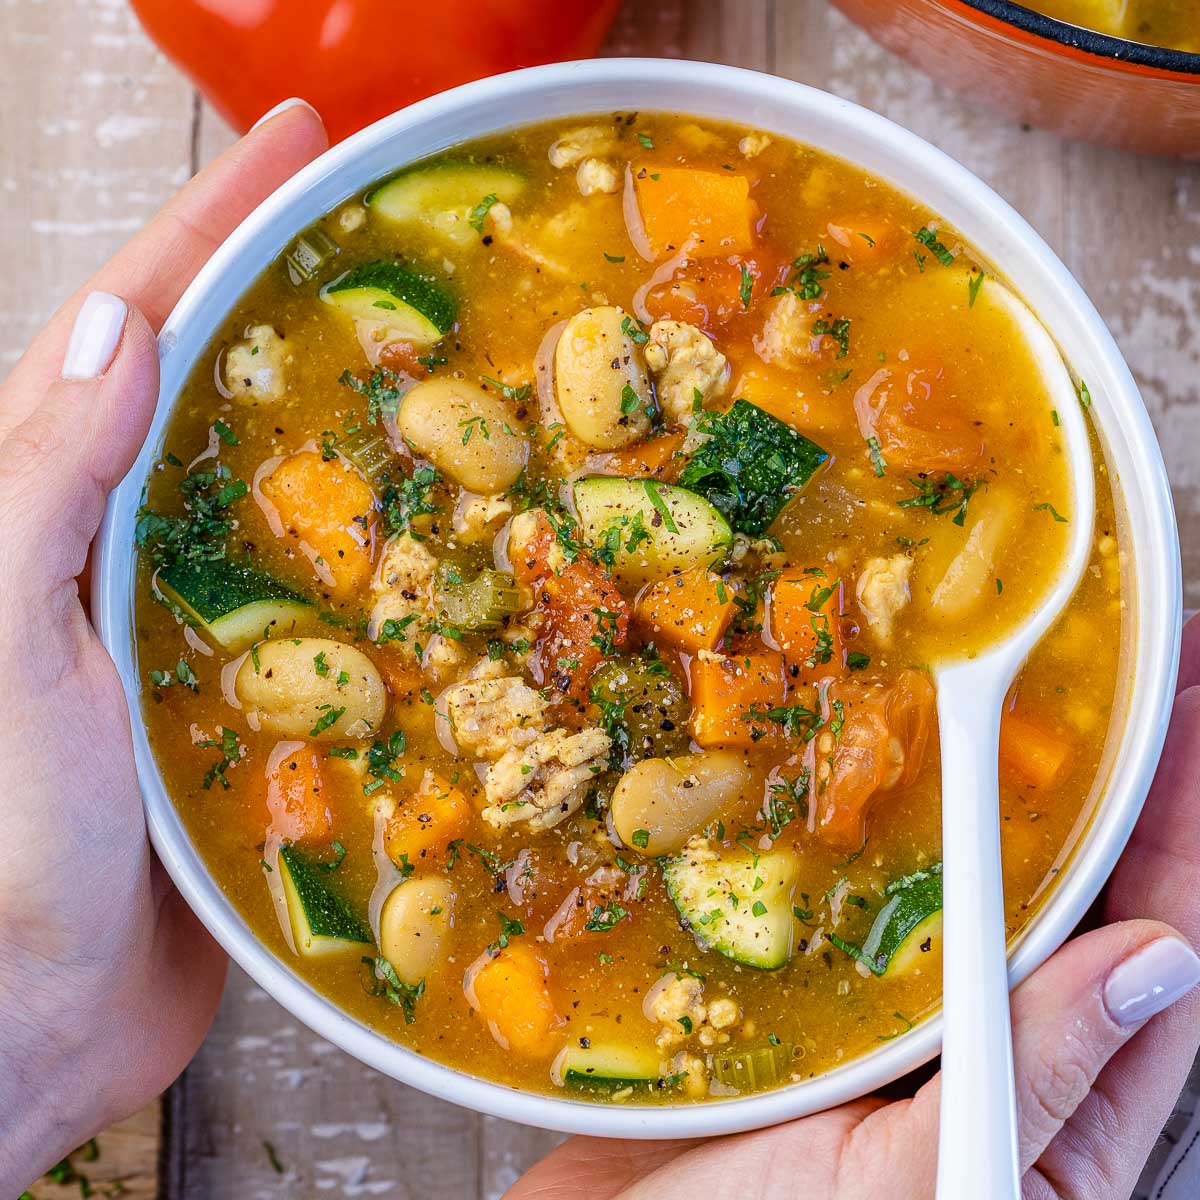 https://cleanfoodcrush.com/wp-content/uploads/2022/02/Veggie-Packed-Turkey-Bean-Soup-recipe.jpg